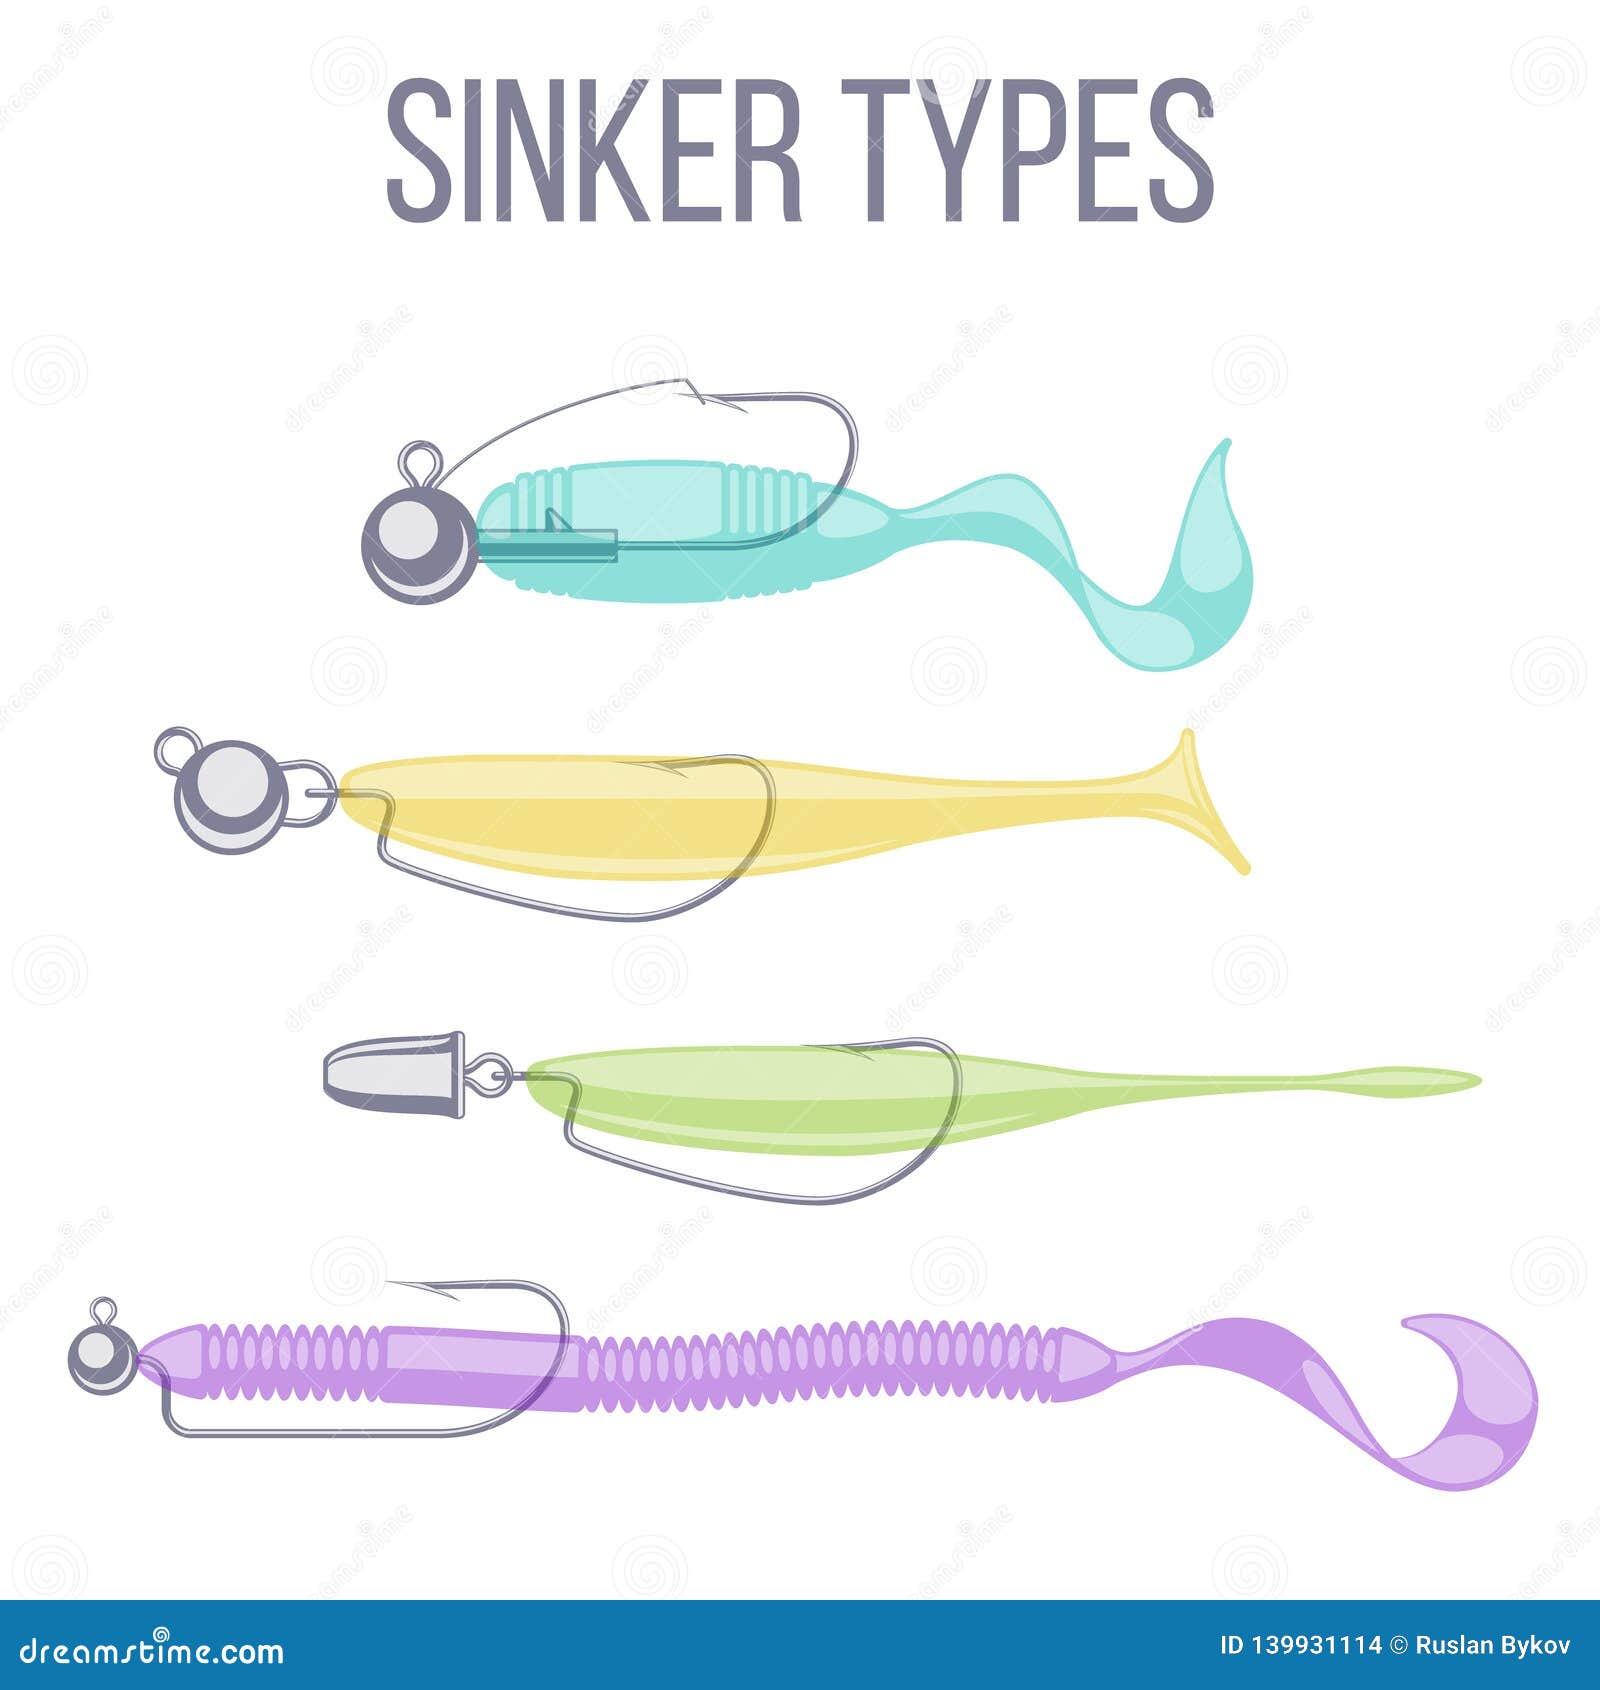 sinker types for catching predatory fish